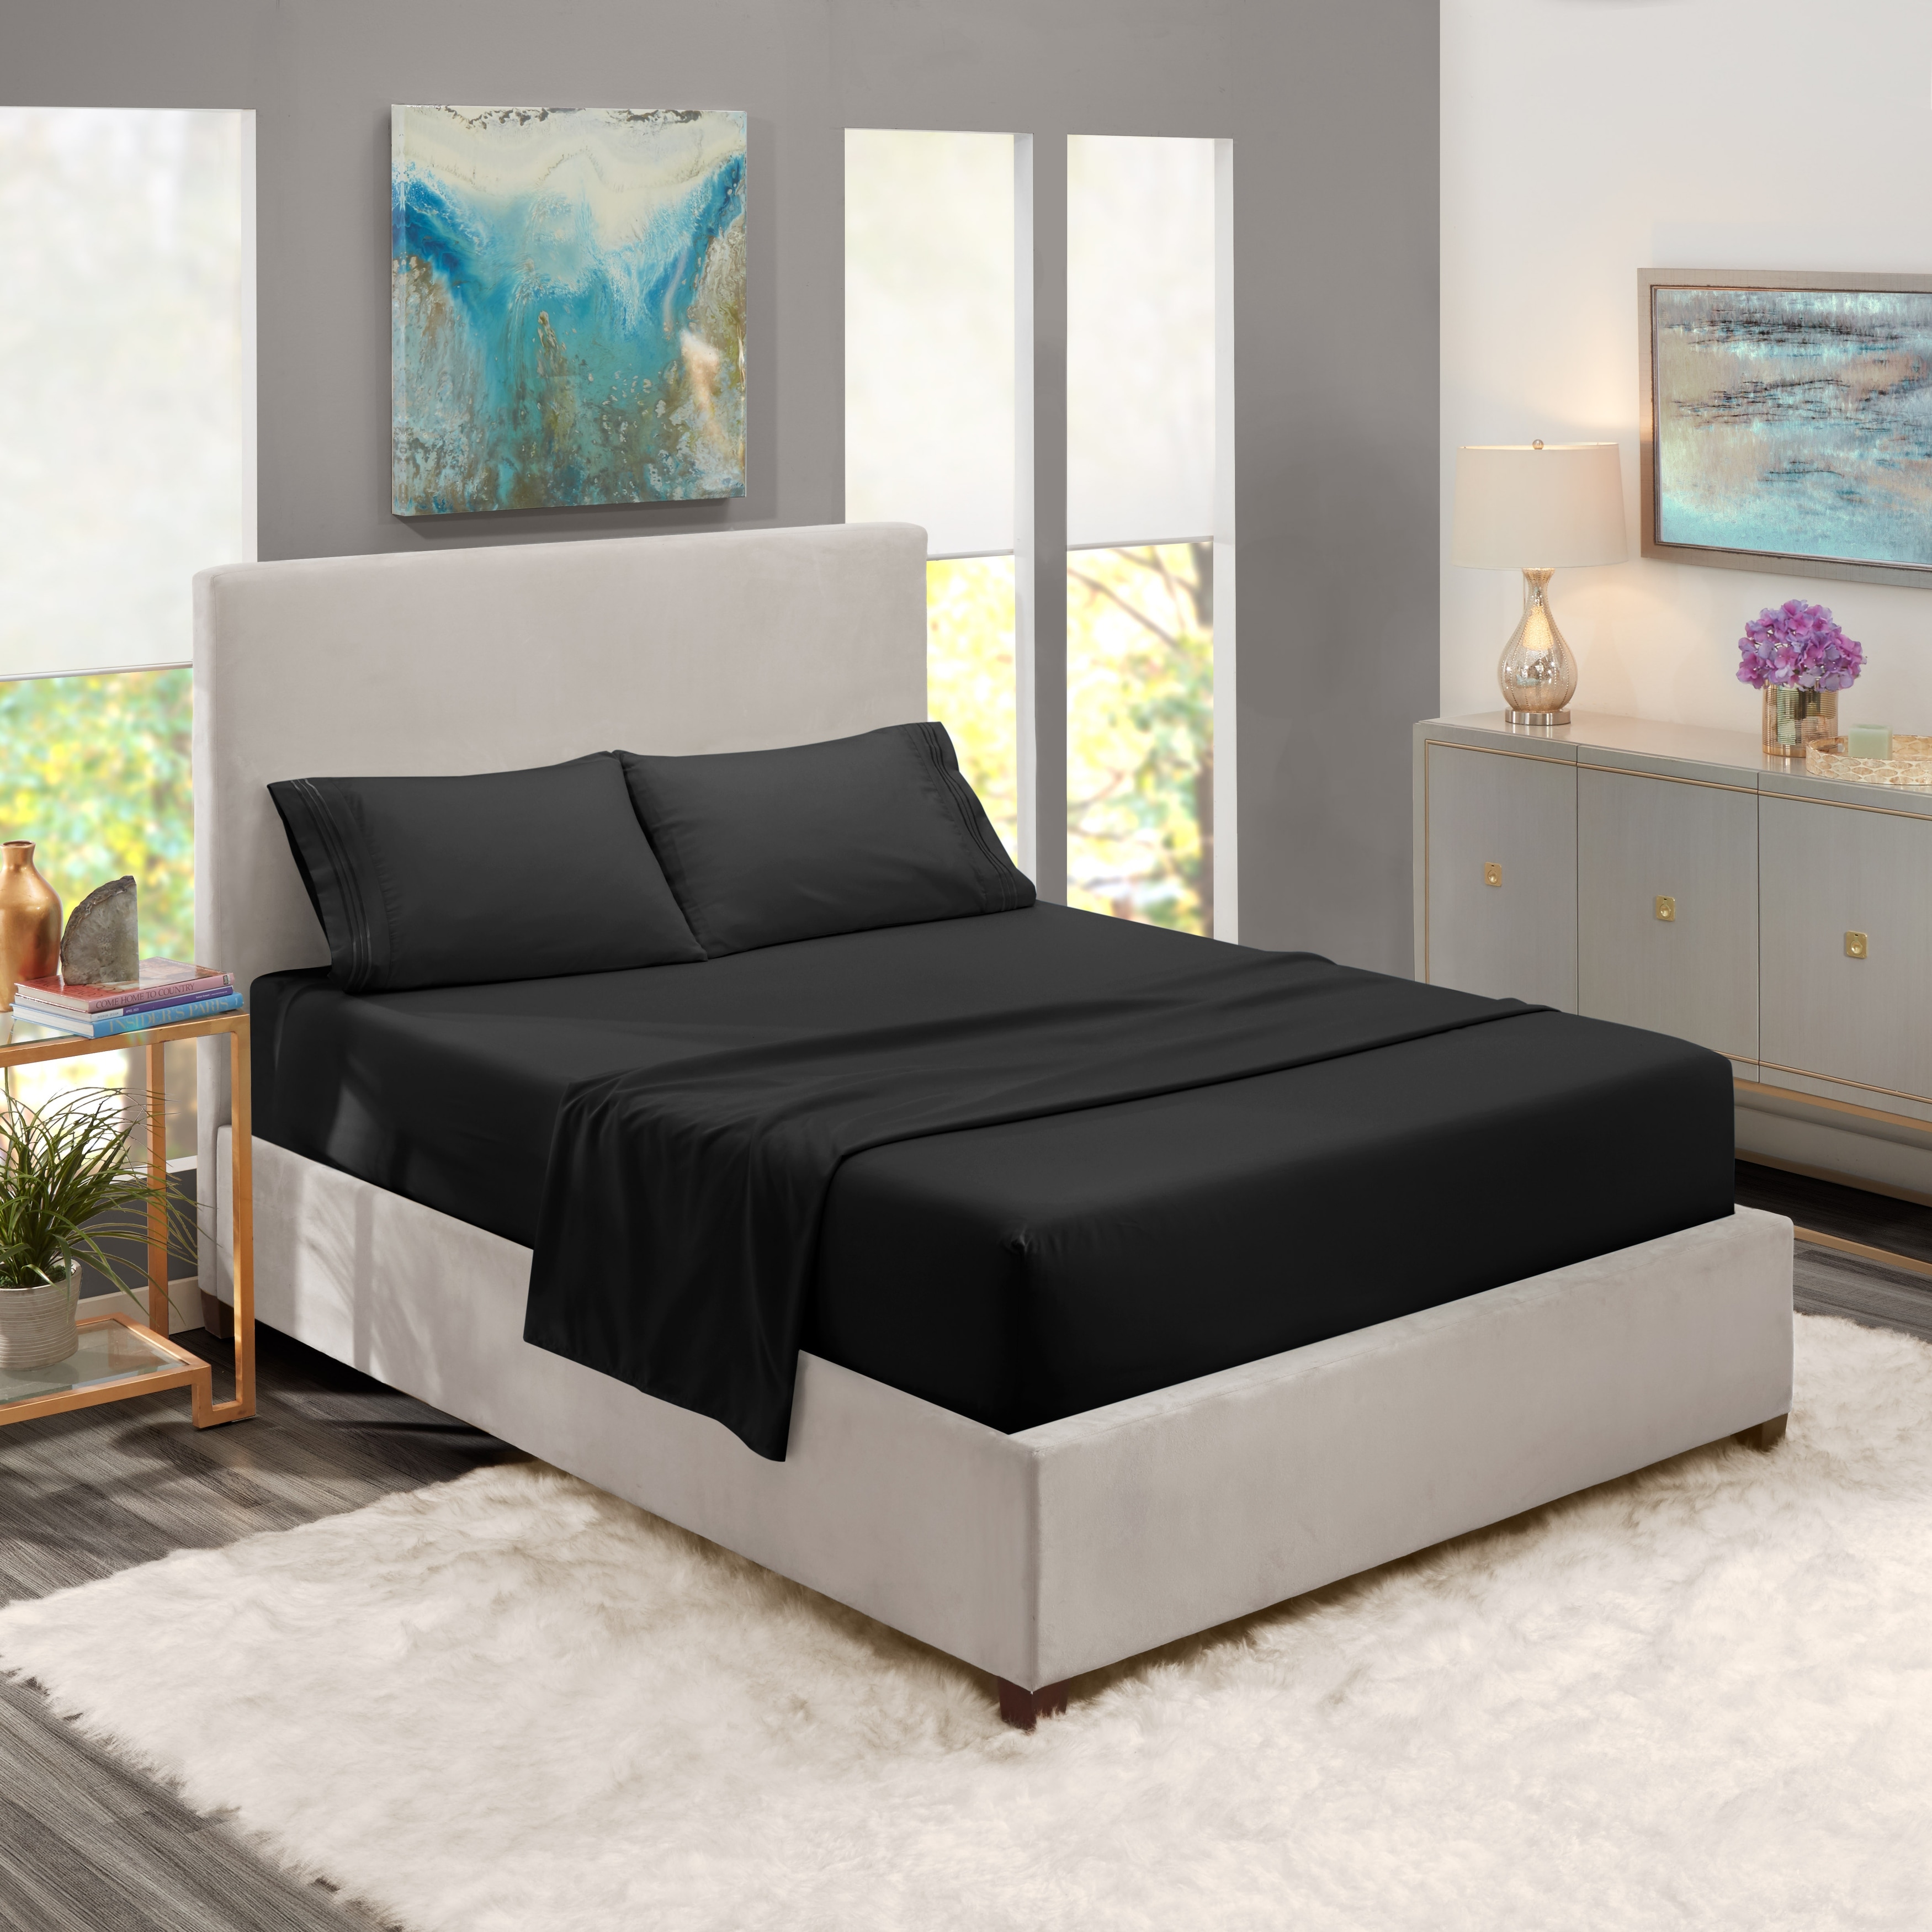 https://ak1.ostkcdn.com/images/products/is/images/direct/3cc4dcd1283014ebd121a332b9822f31a07610e9/Nestl-Bedding-Extra-Soft-Microfiber-Bed-Sheet-Set.jpg